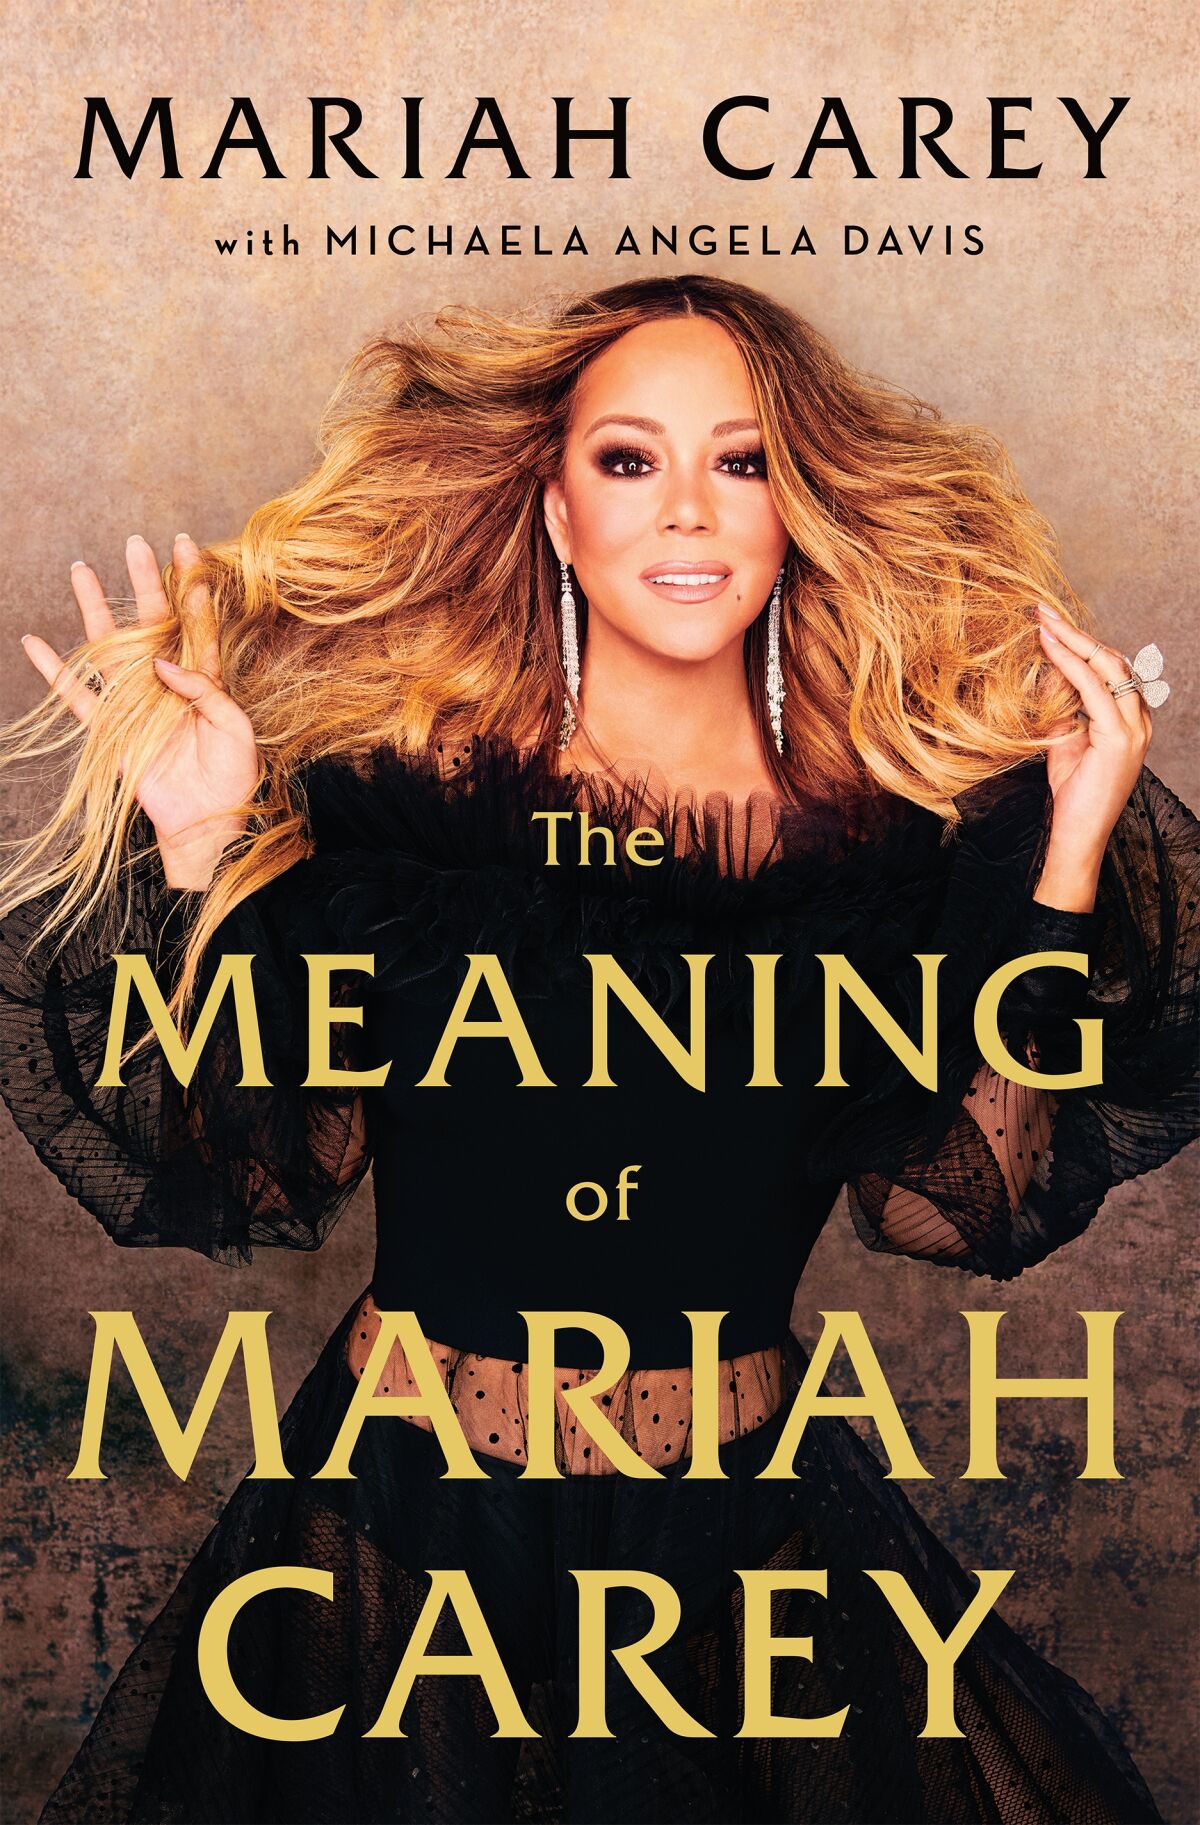 "The Meaning of Mariah Carey," a memoir.